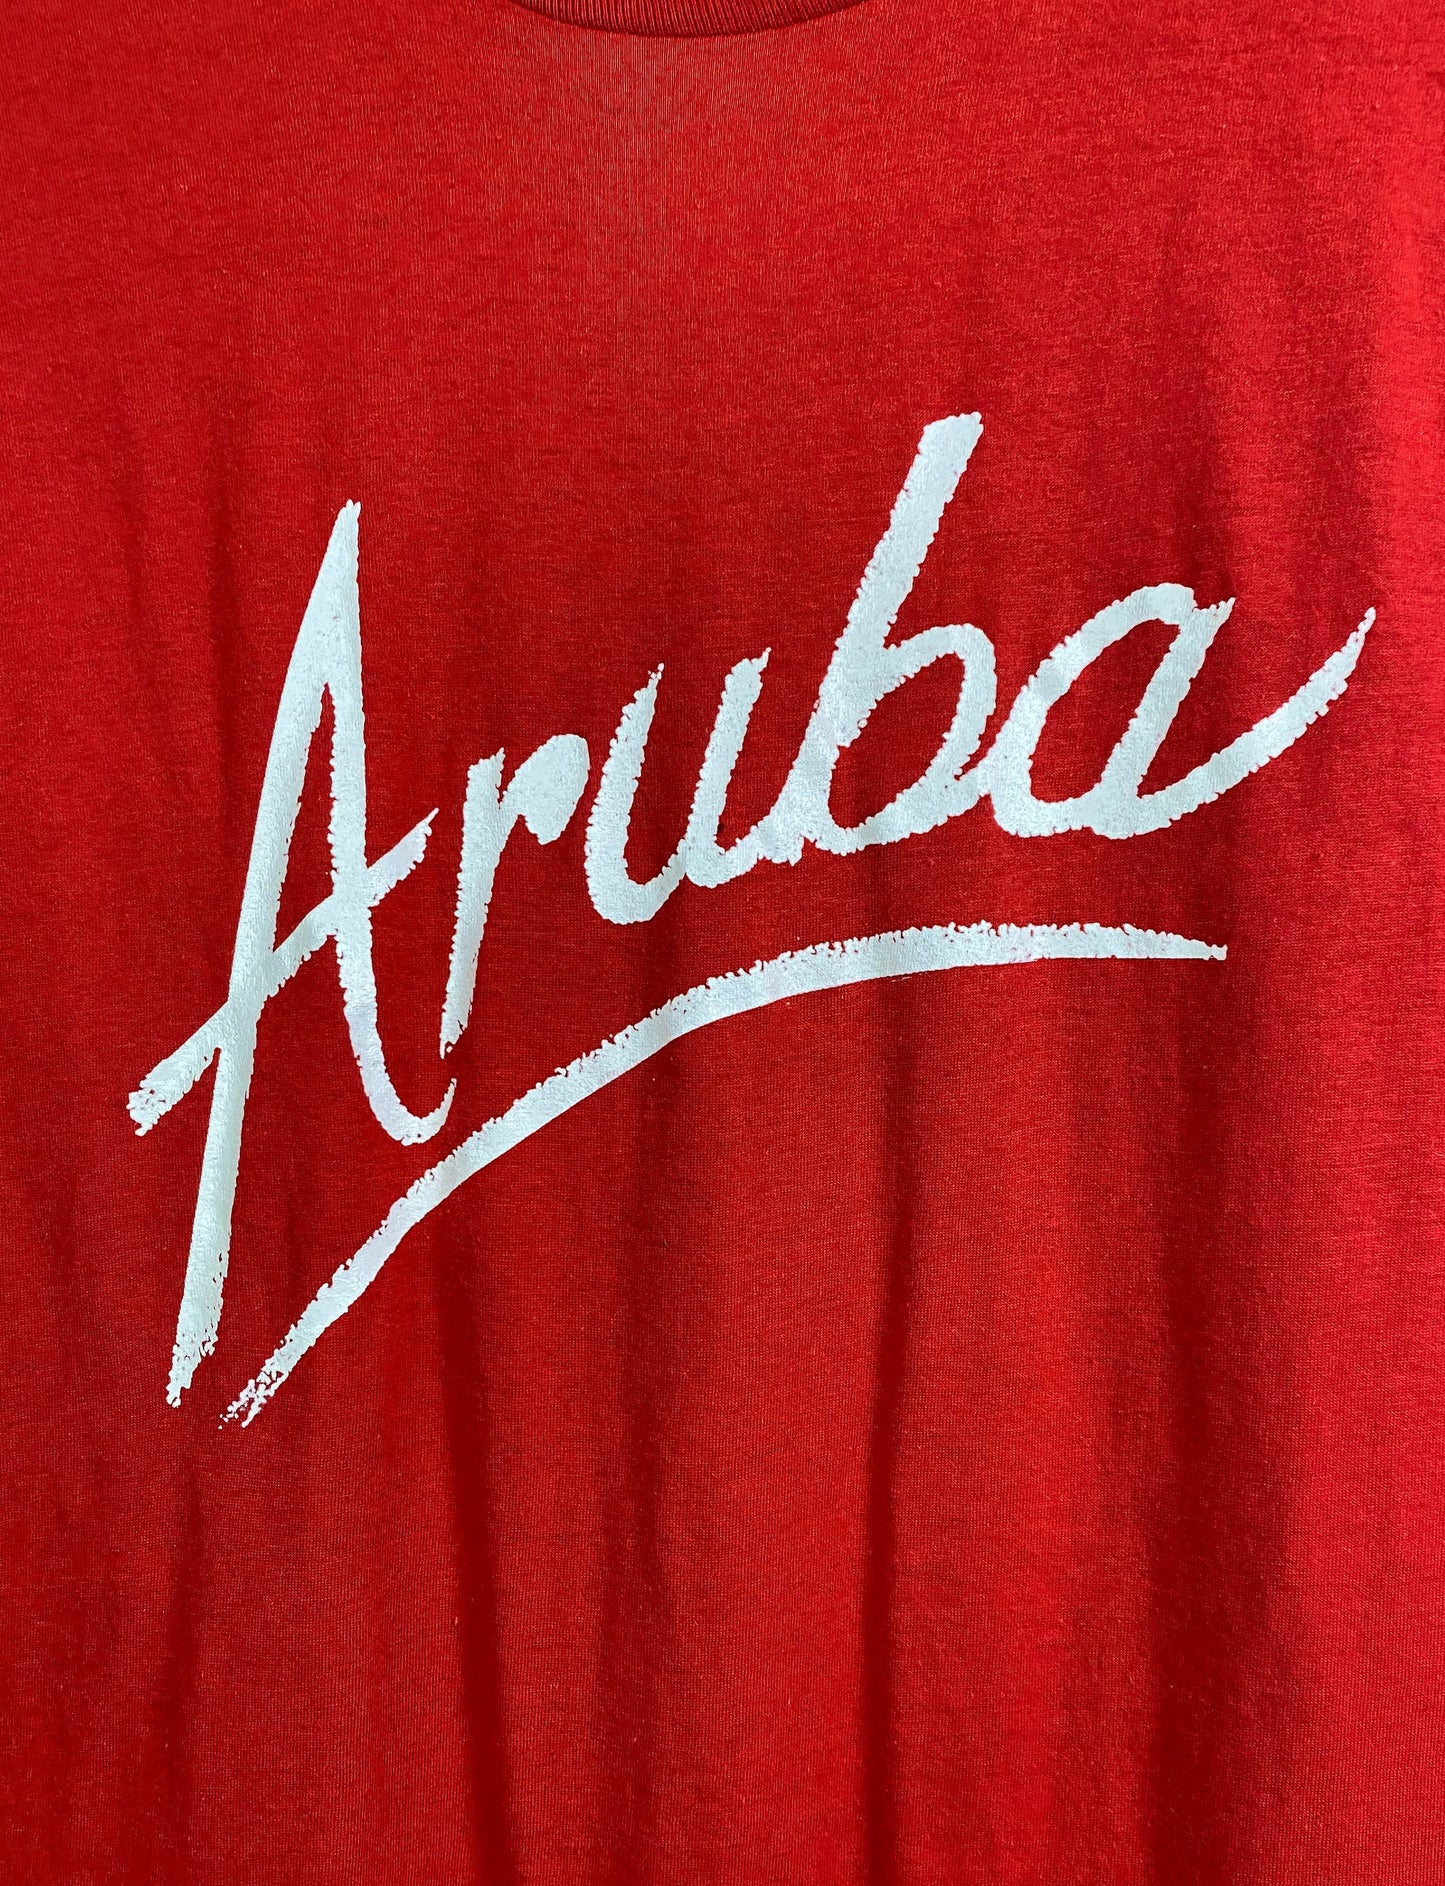 Vintage 80's Aruba Graphic T Shirt Souvenir Vacation Red Unisex Medium